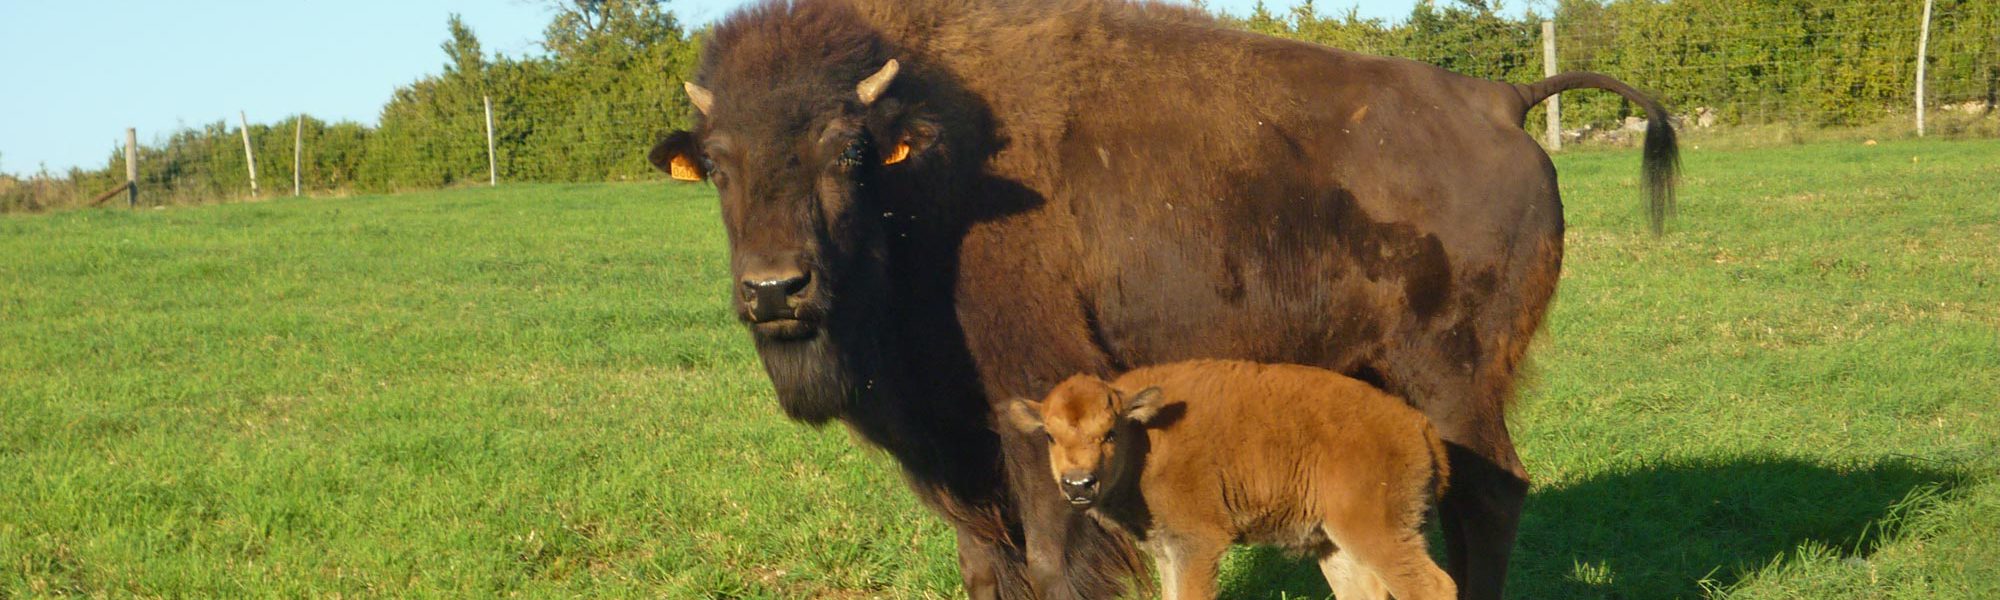 s-bisone-bb-bison